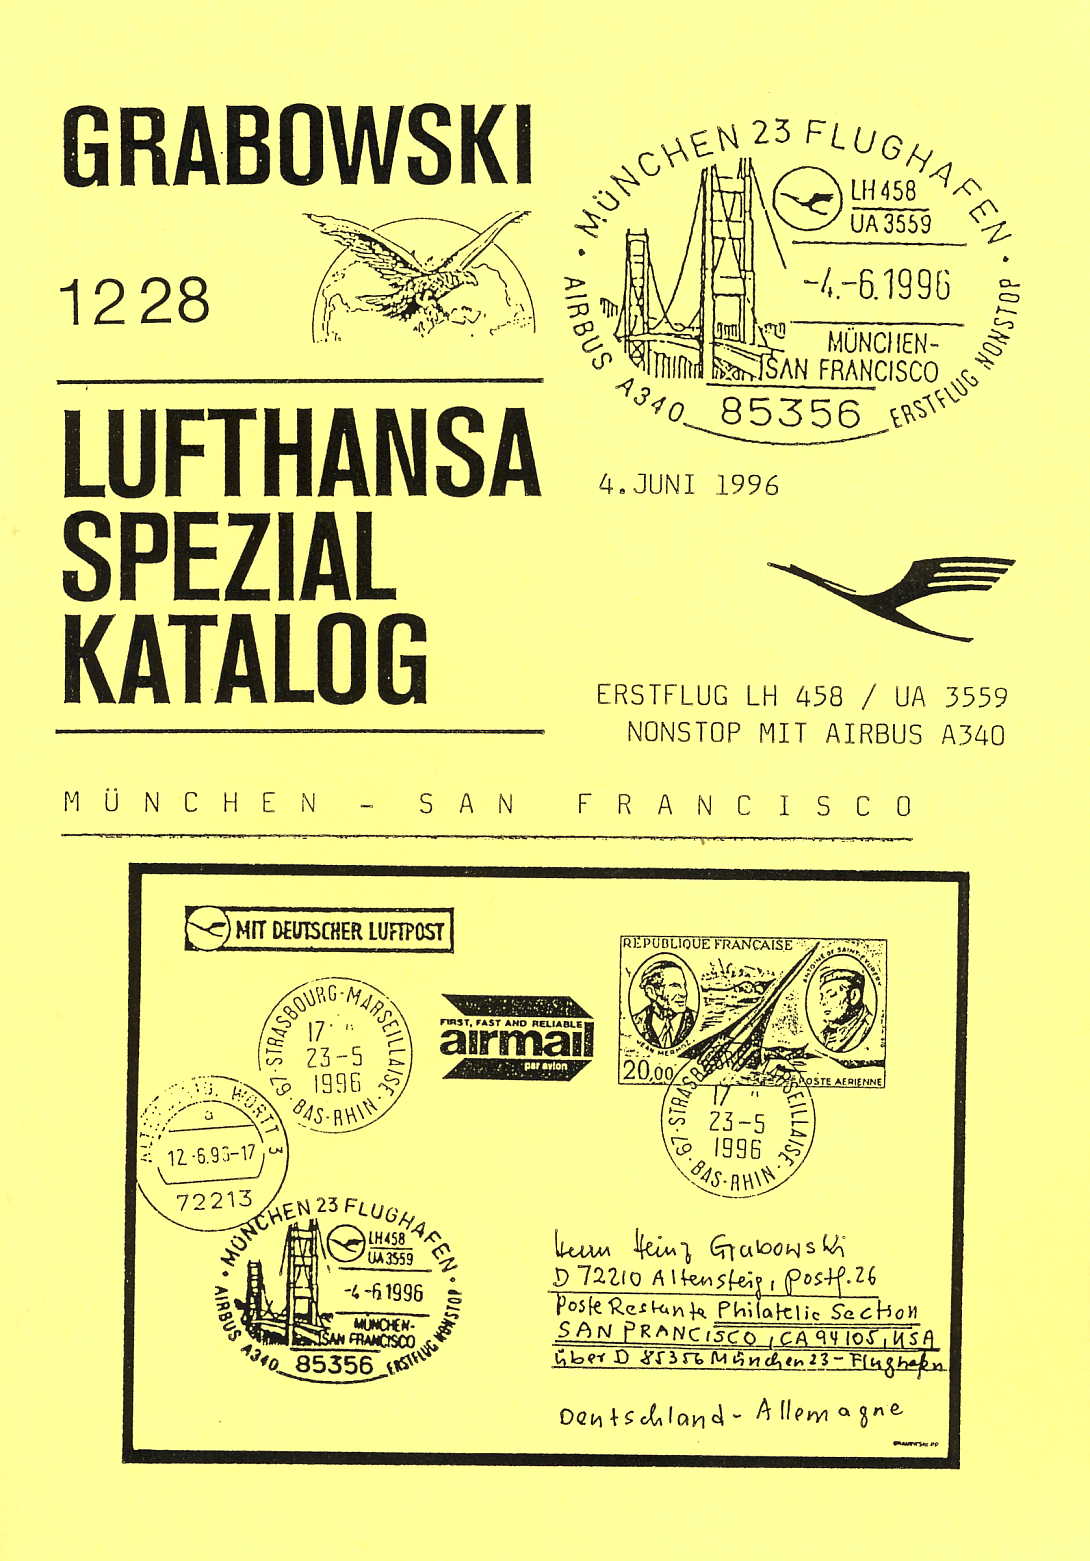 Grabowski Lufthansa-Spezialkatalog Flug Nr. 1228